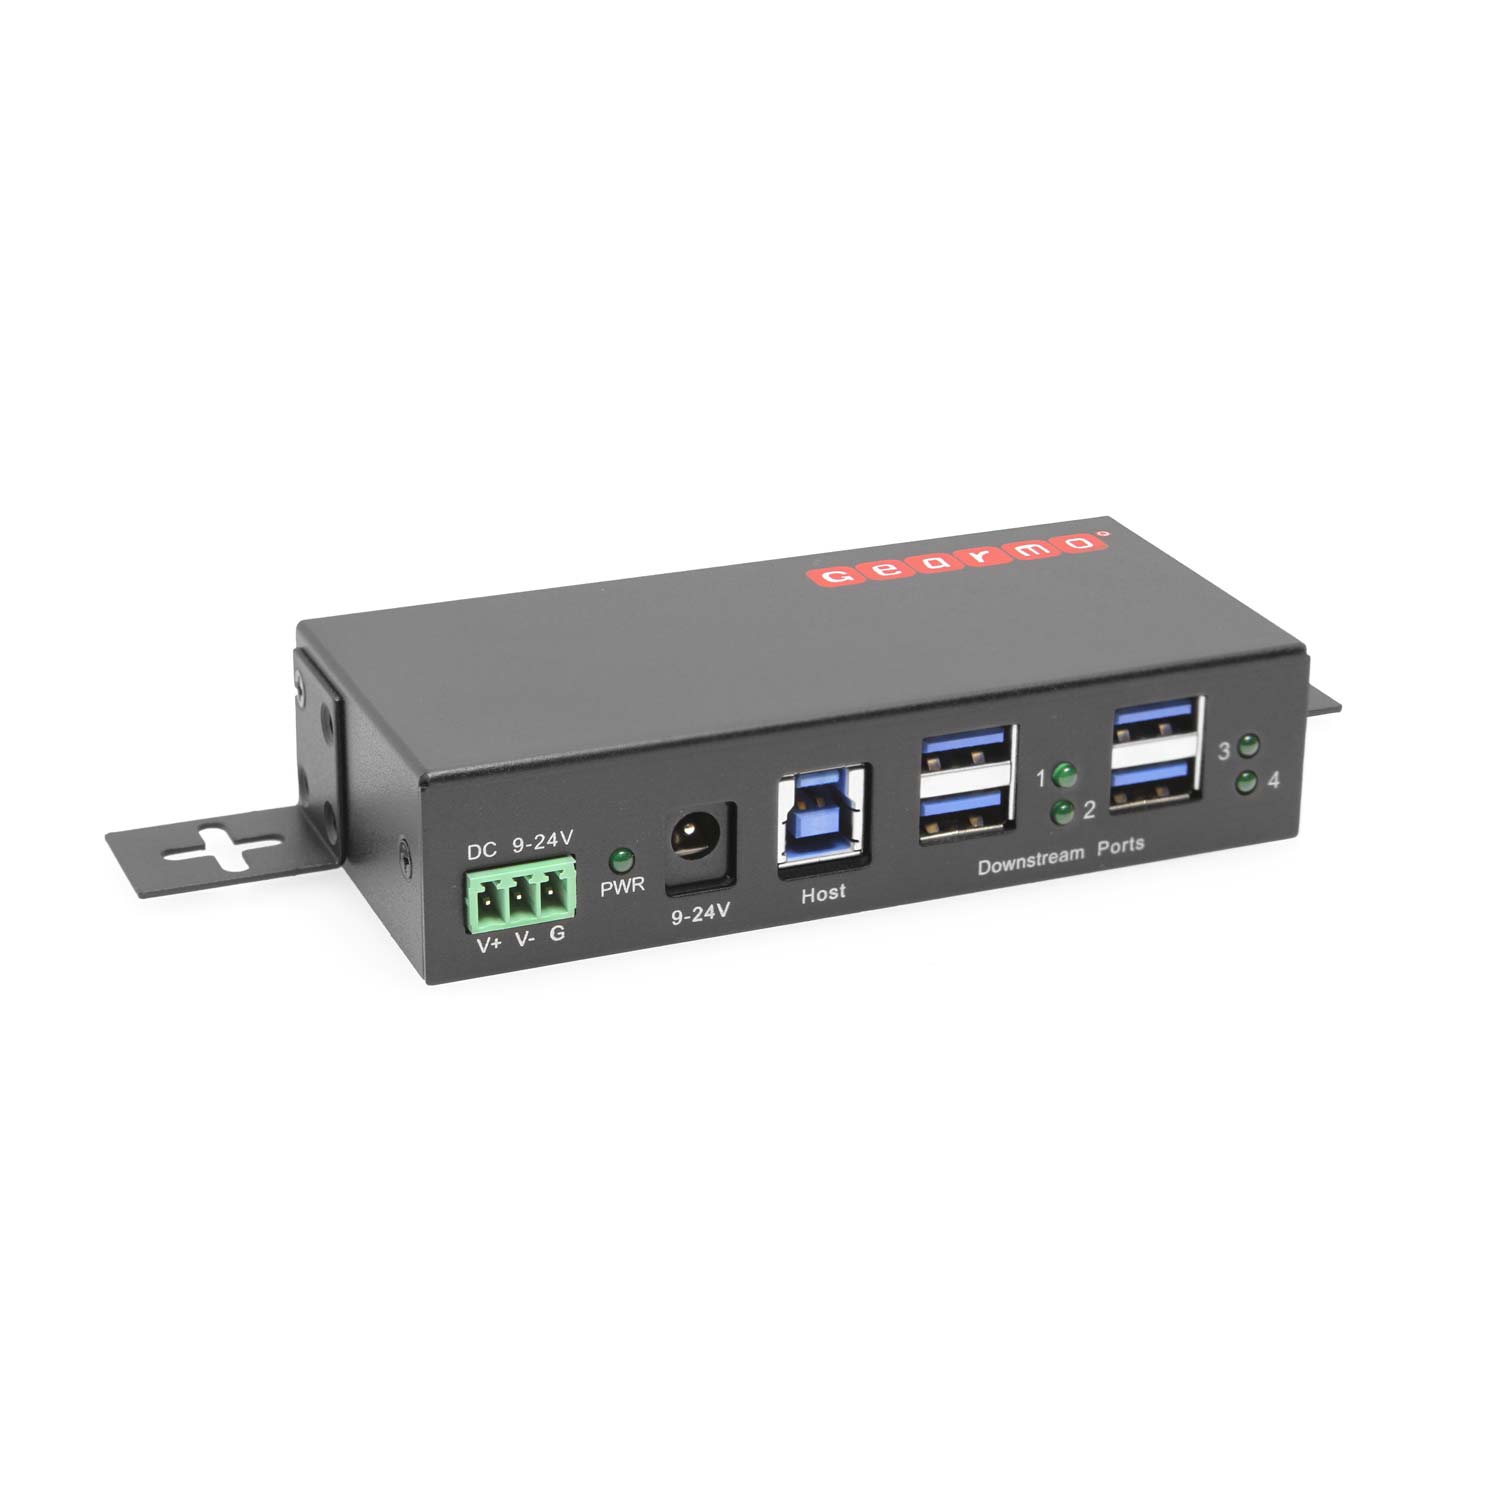 4 Port USB 3.0 Hub - Black